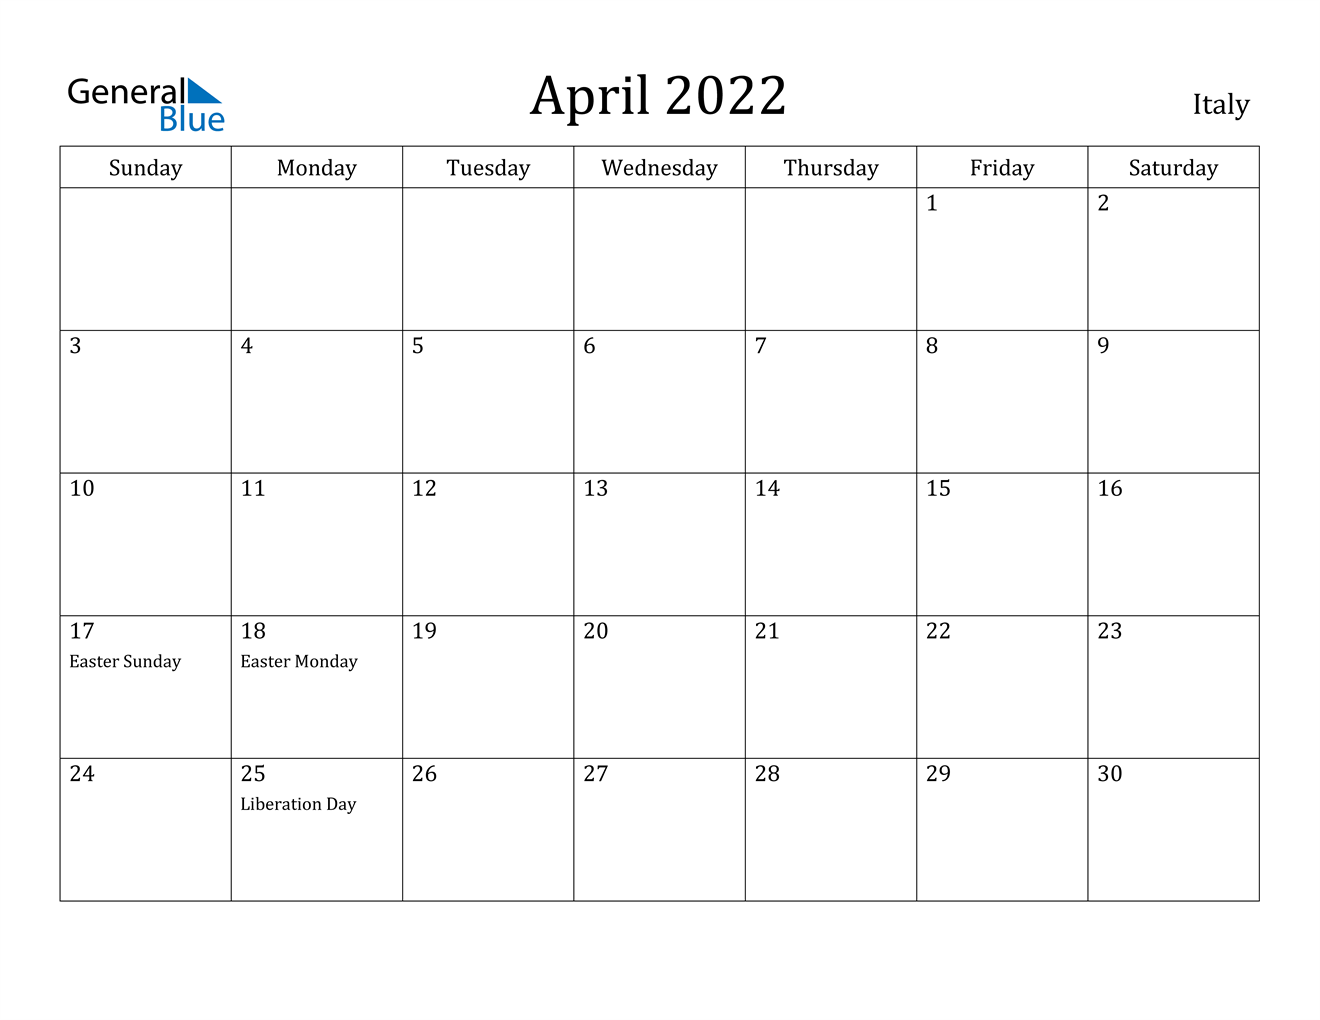 April 2022 Calendar Italy